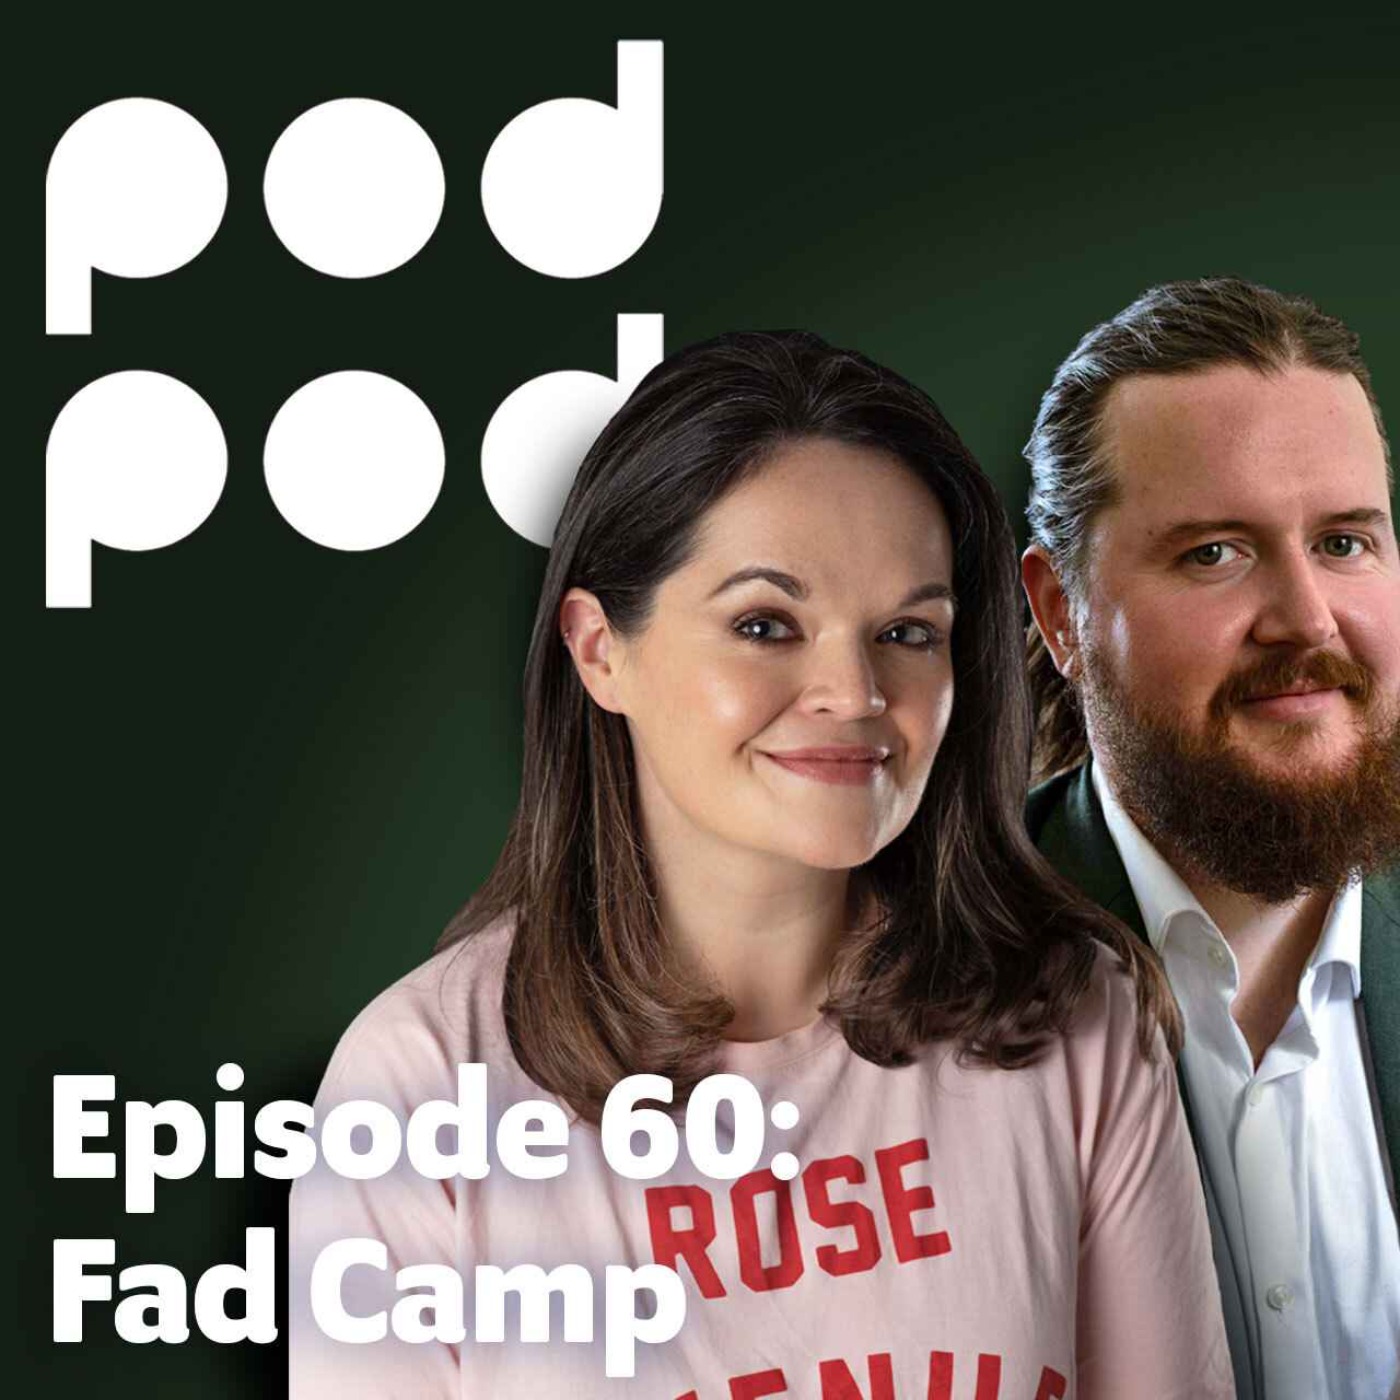 Fad Camp: Tackling serious conversations through comedy